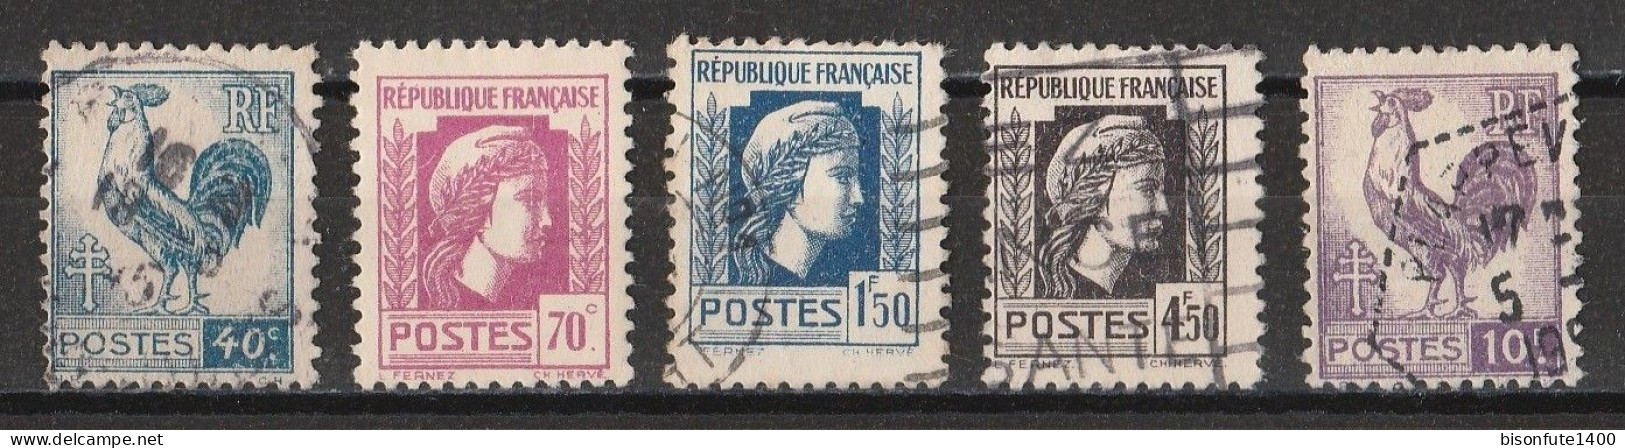 France 1944 : Timbres Yvert & Tellier N° 632 - 635 - 639 - 644 Et 646 Avec Oblitérations Rondes. - Gebraucht